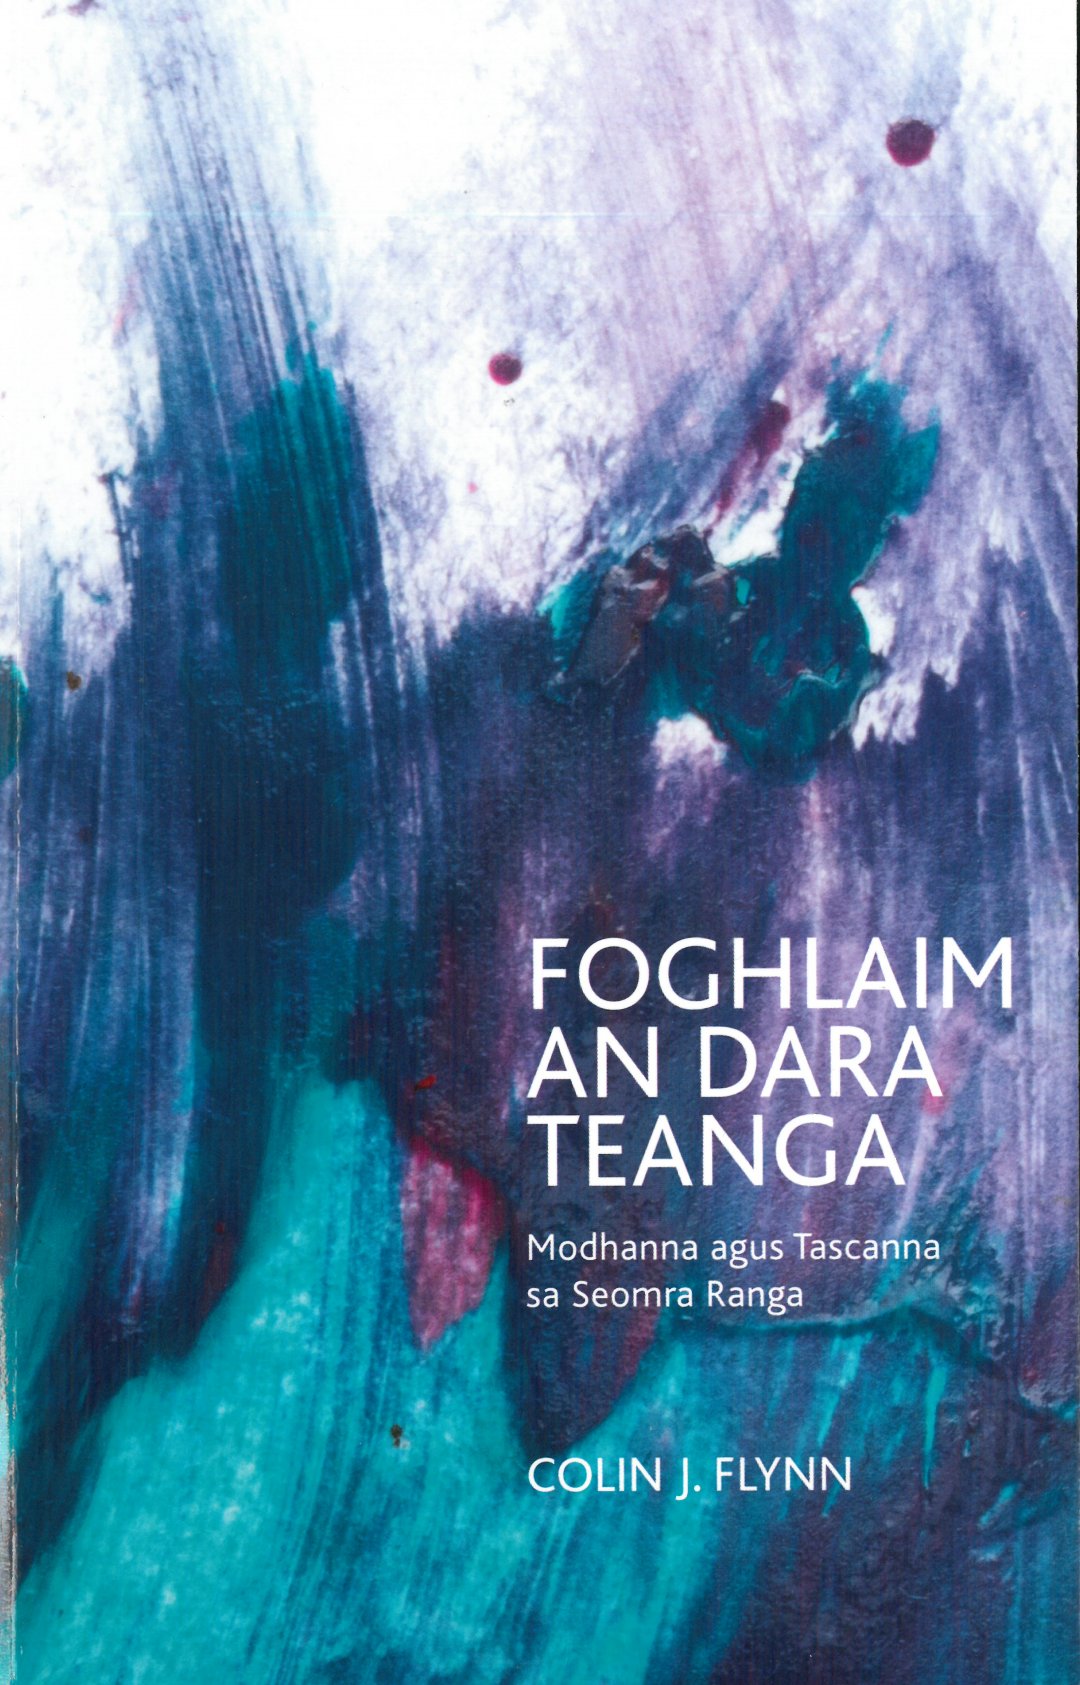 Foghlaim An Dara Teanga by Colin J. Flynn